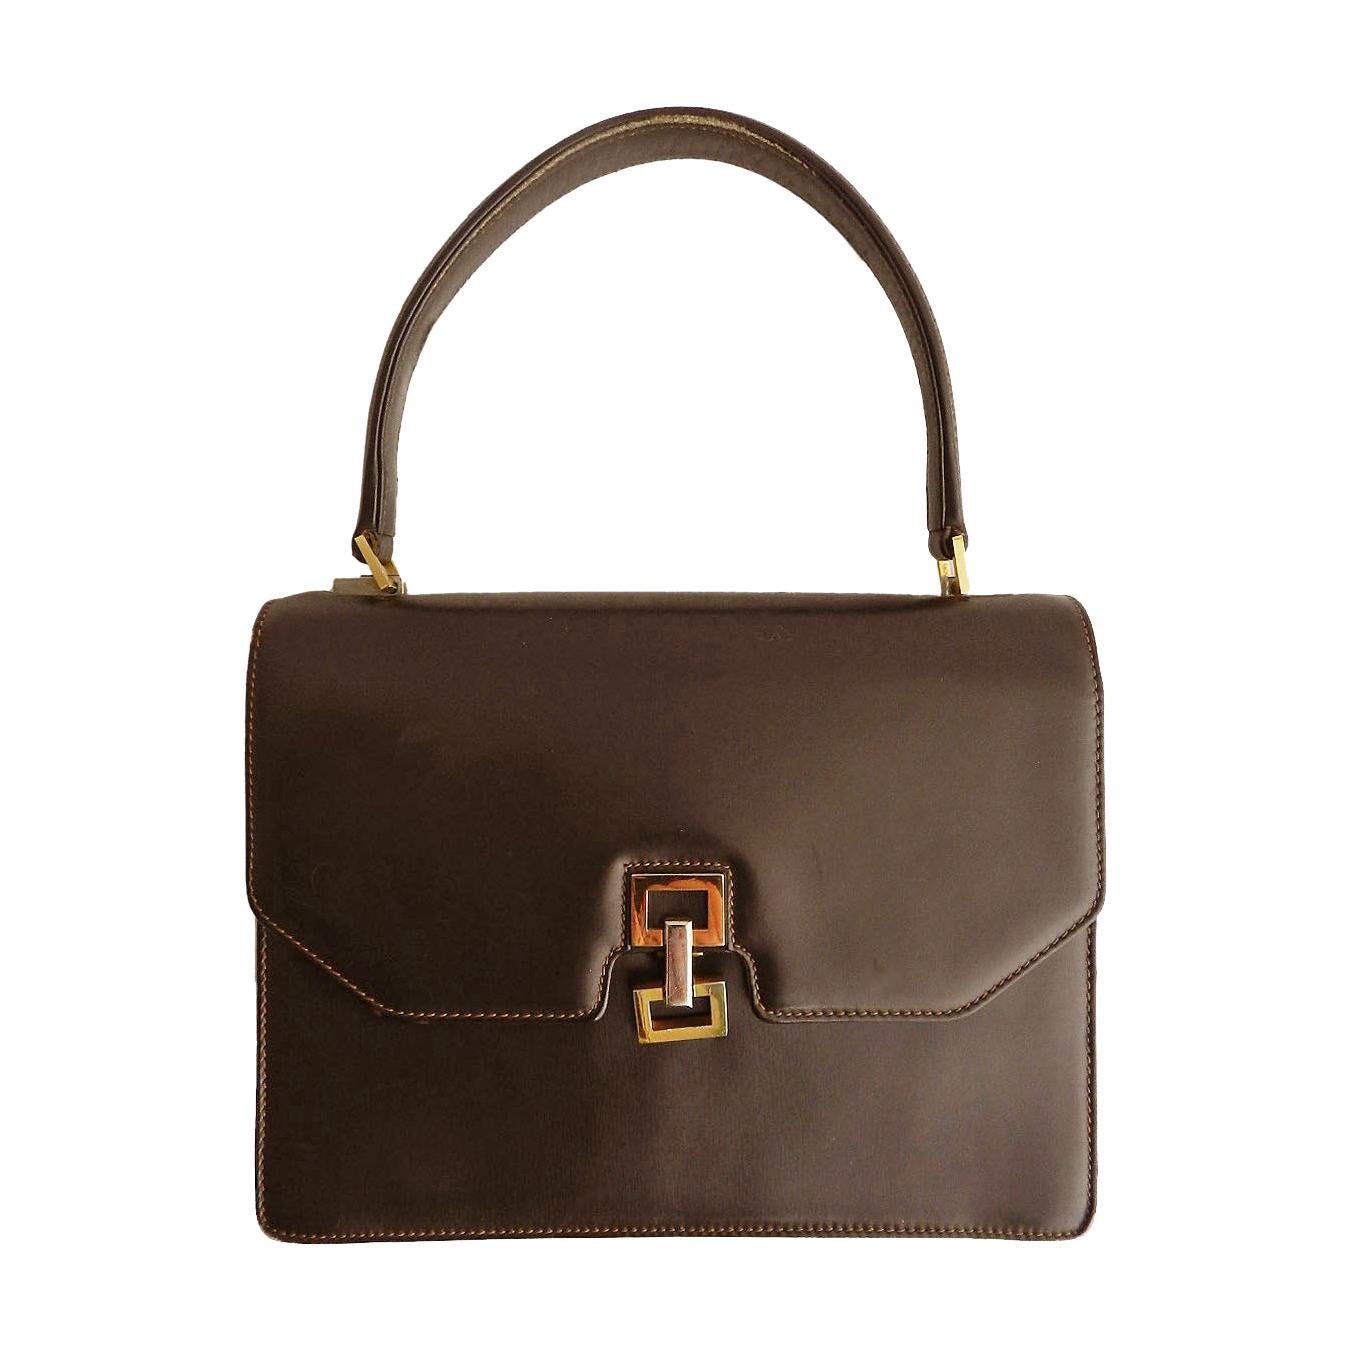 Gucci Brown Leather Handbag Top Handles Bag Vintage, Late 20th Century For Sale